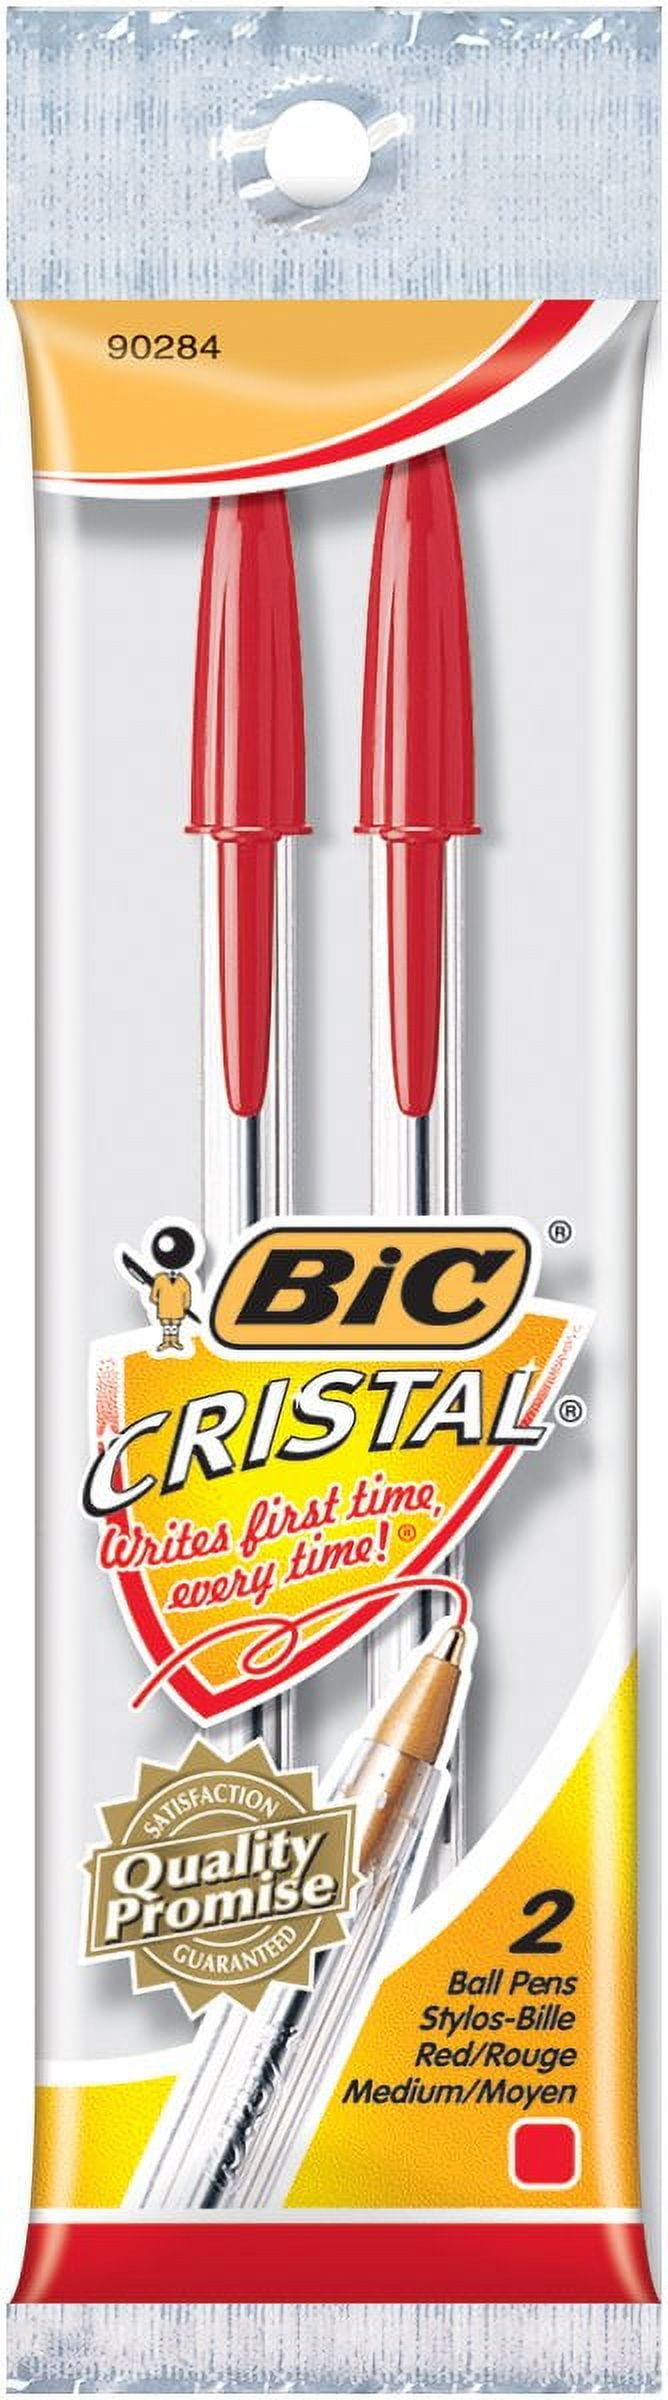 BIC Cristal Original Stylos-Bille Pointe Moyenne (1,0 mm